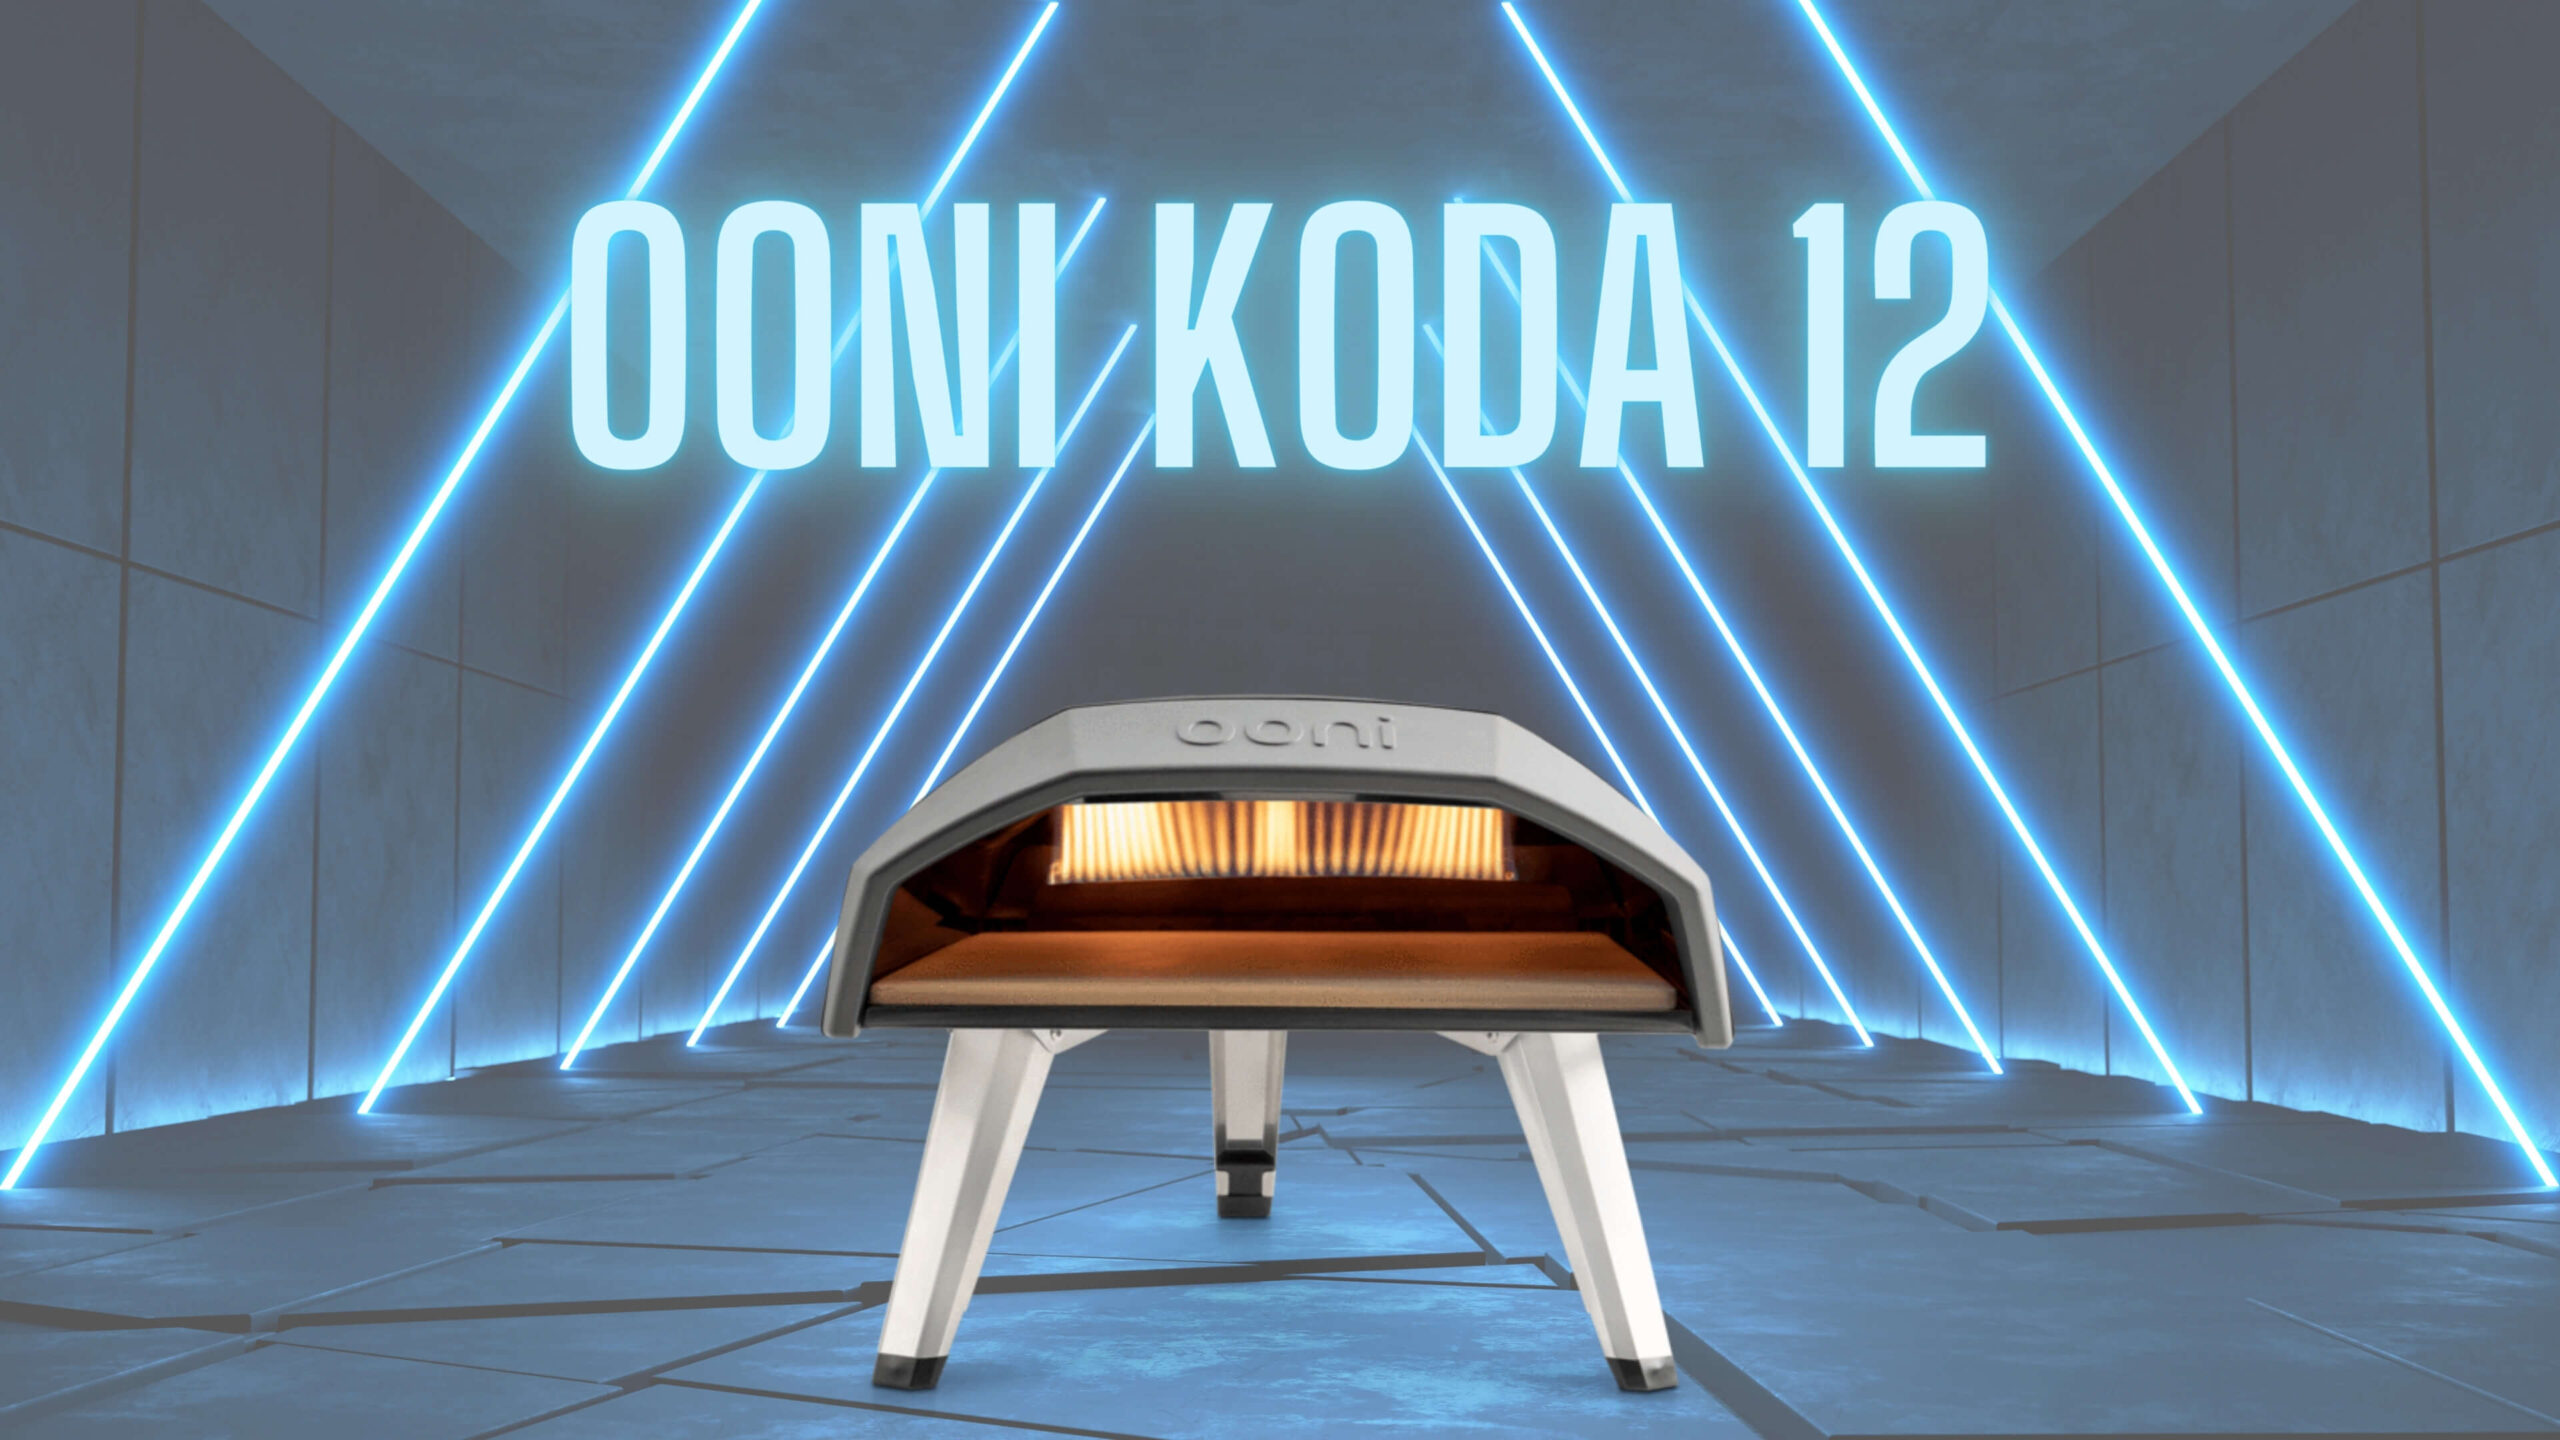 Ooni koda 12 with customized background